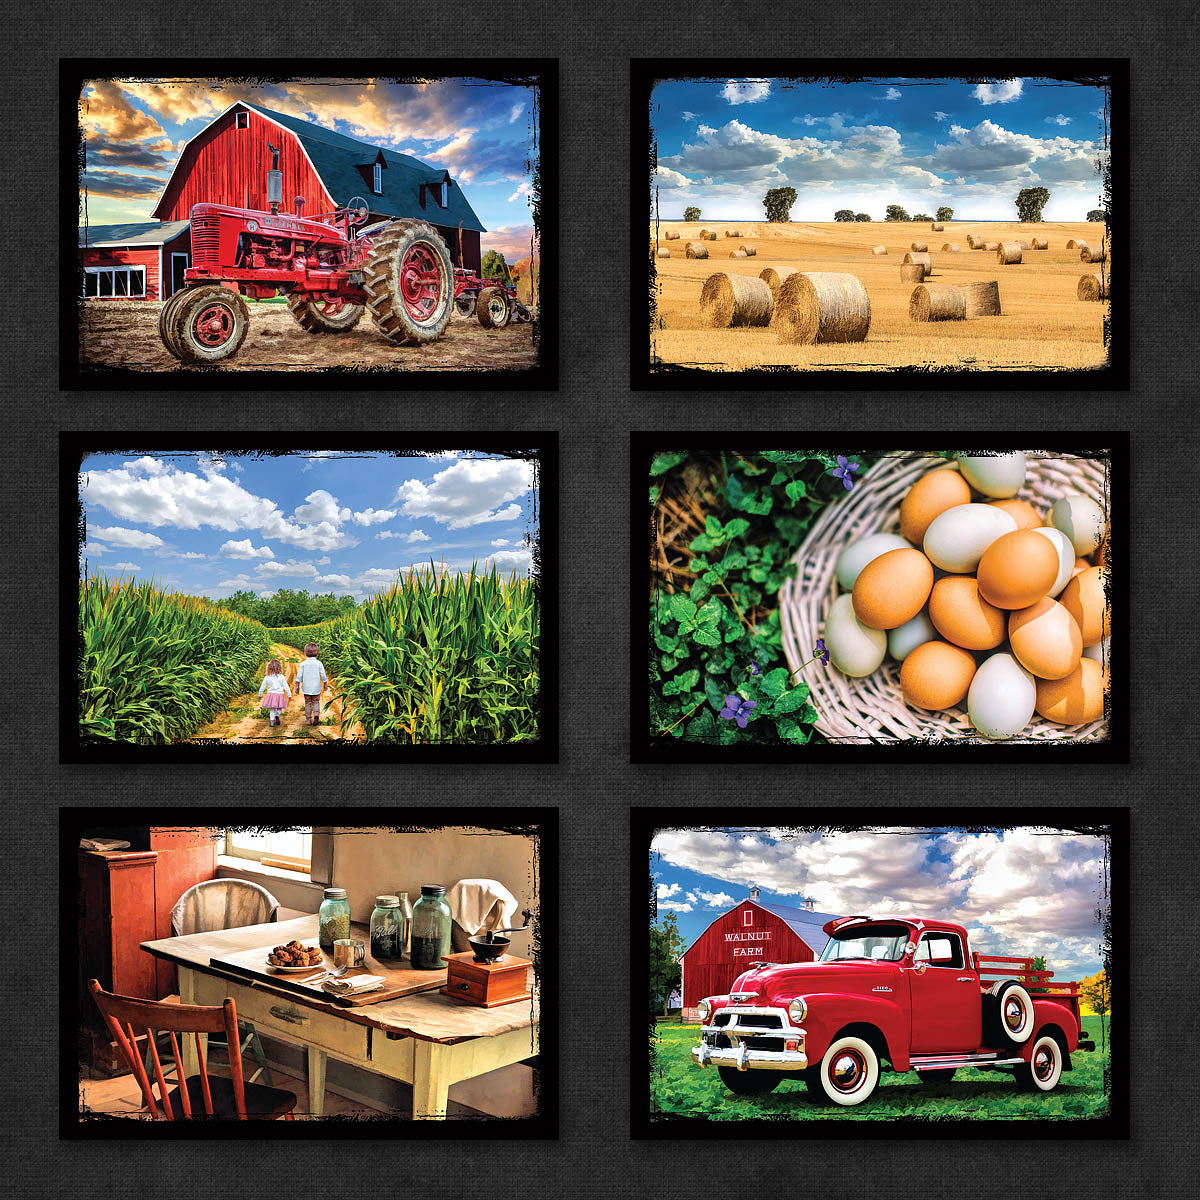 Farm and Barn Postcards | Set of 12